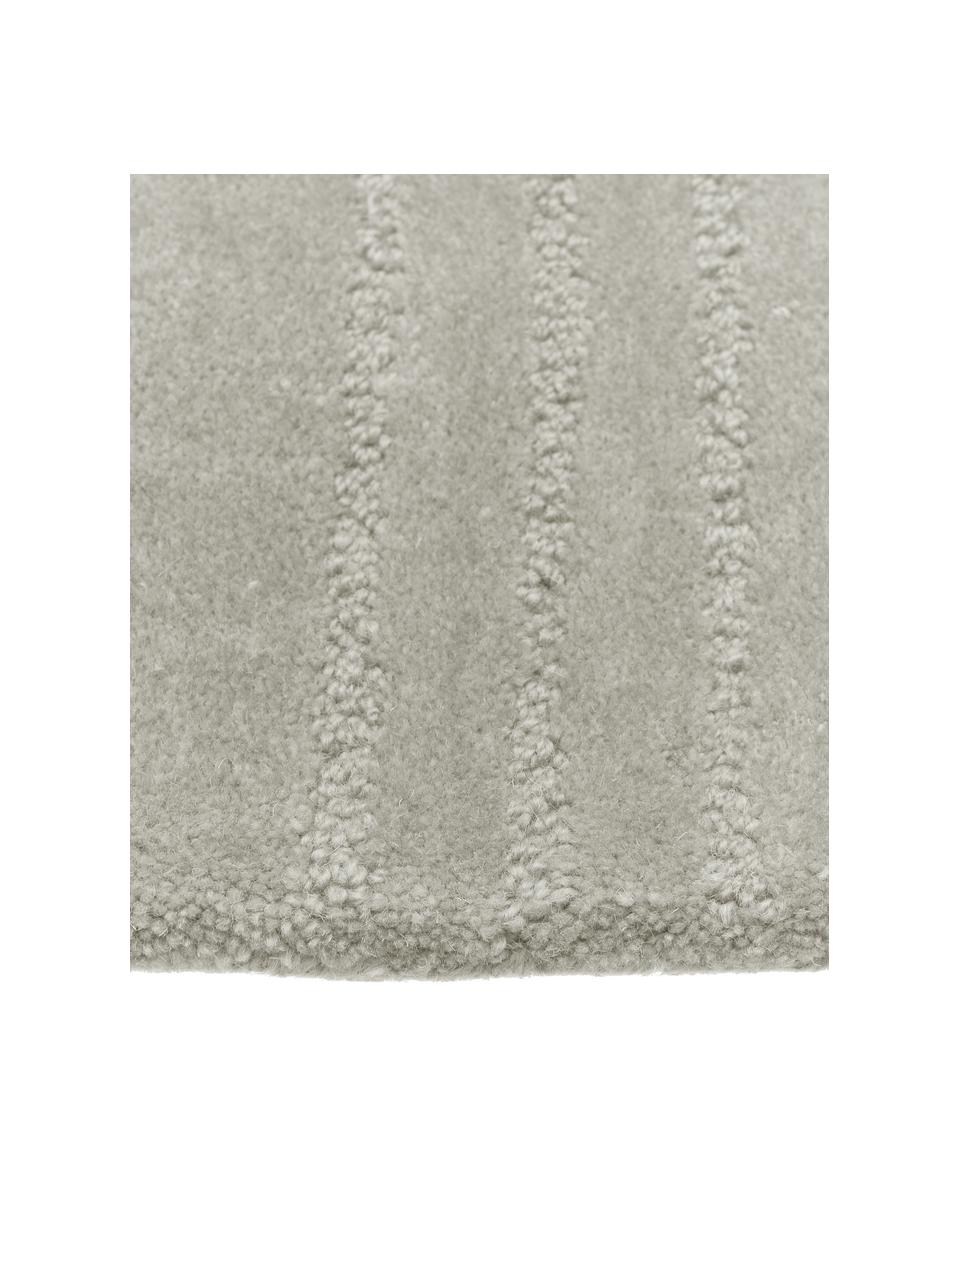 Wollteppich Mason in Hellgrau, handgetuftet, Flor: 100 % Wolle, Hellgrau, B 160 x L 230 cm (Größe M)